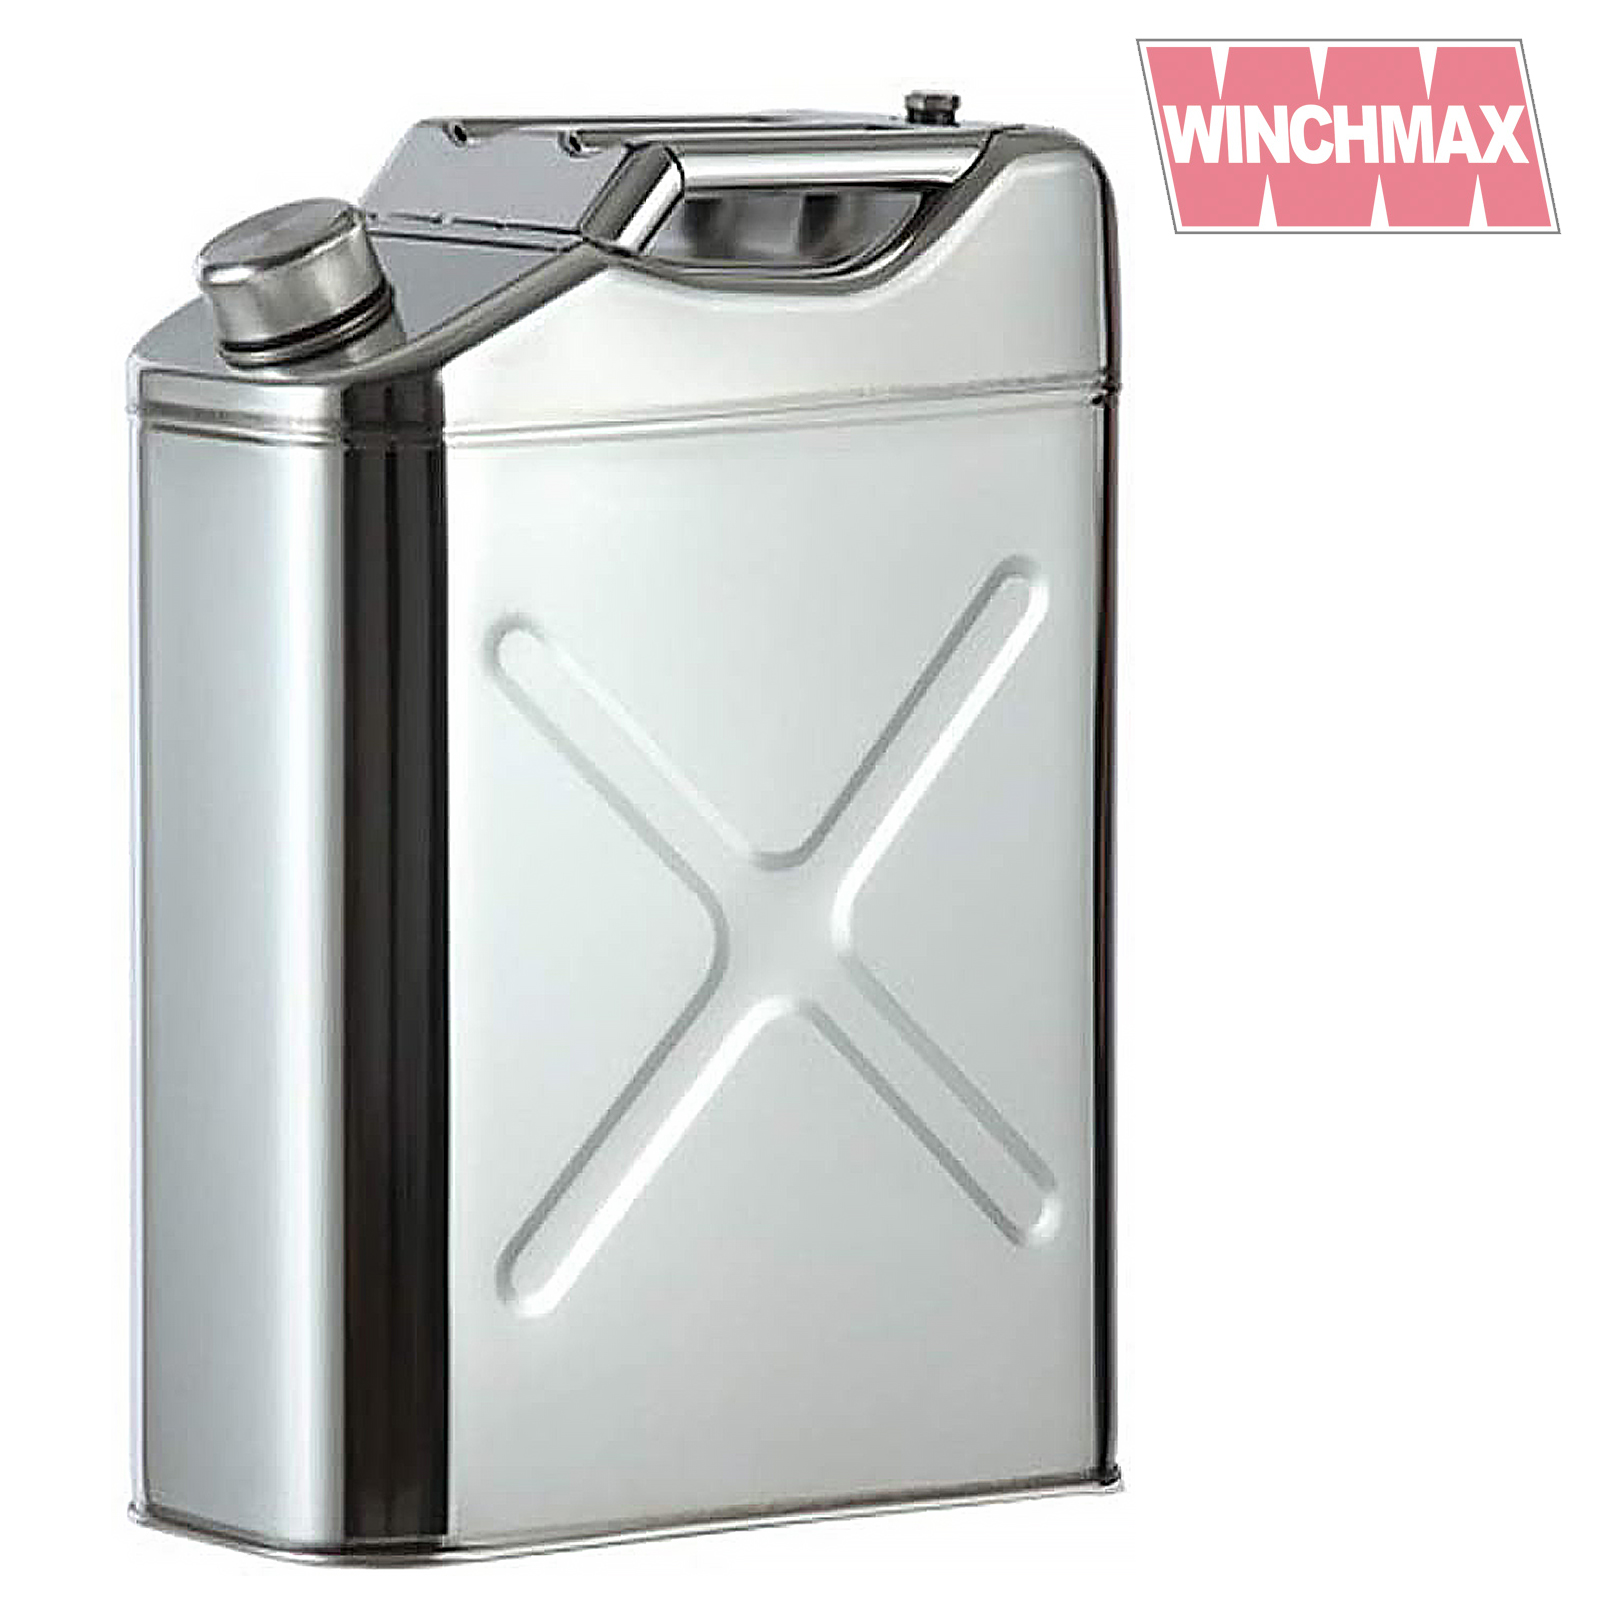 Winchmax 20l Standard Jerry Can